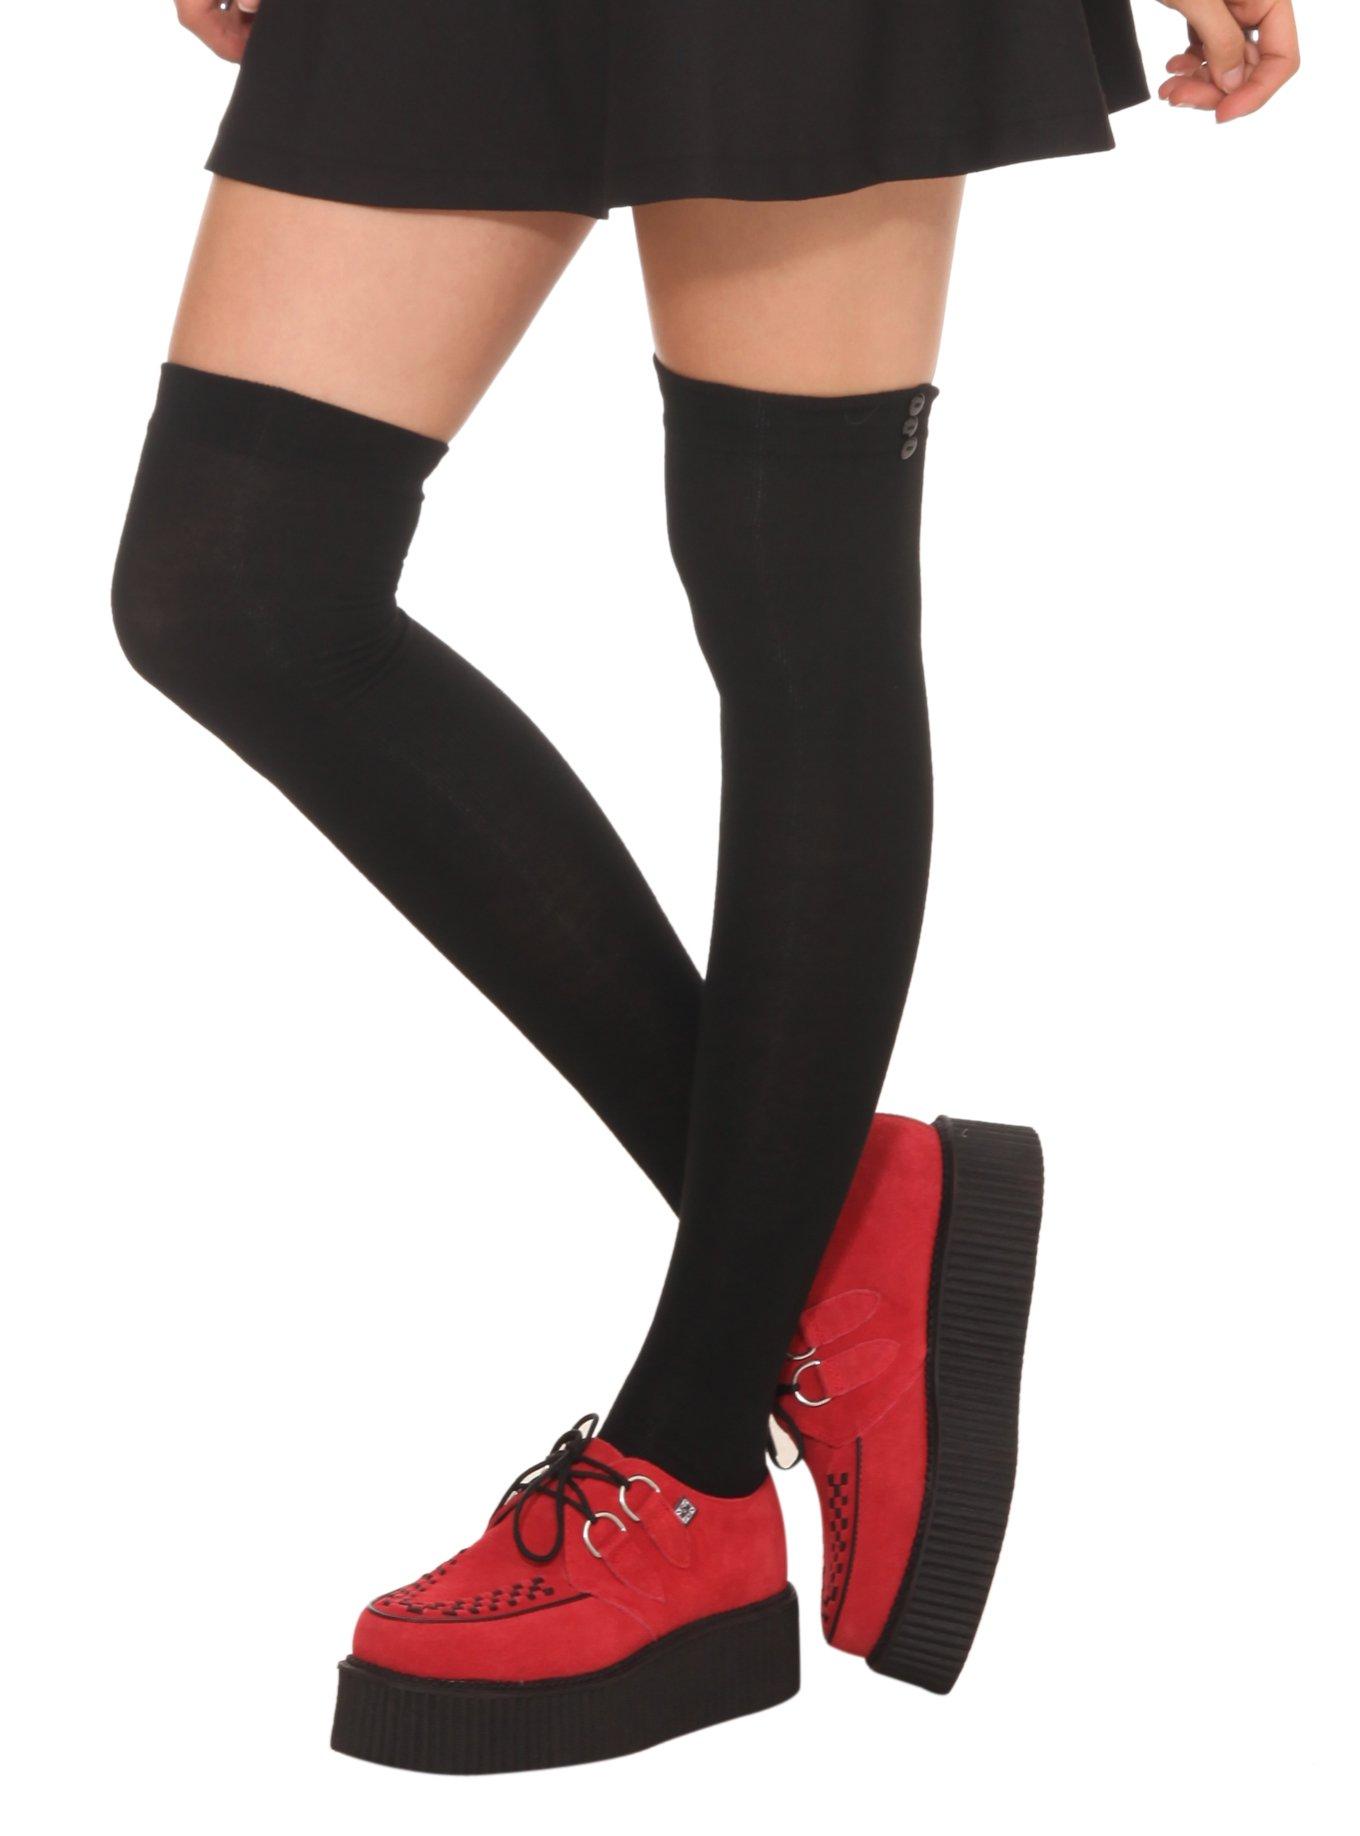 LOVEsick Black Over-The-Knee Socks, , hi-res